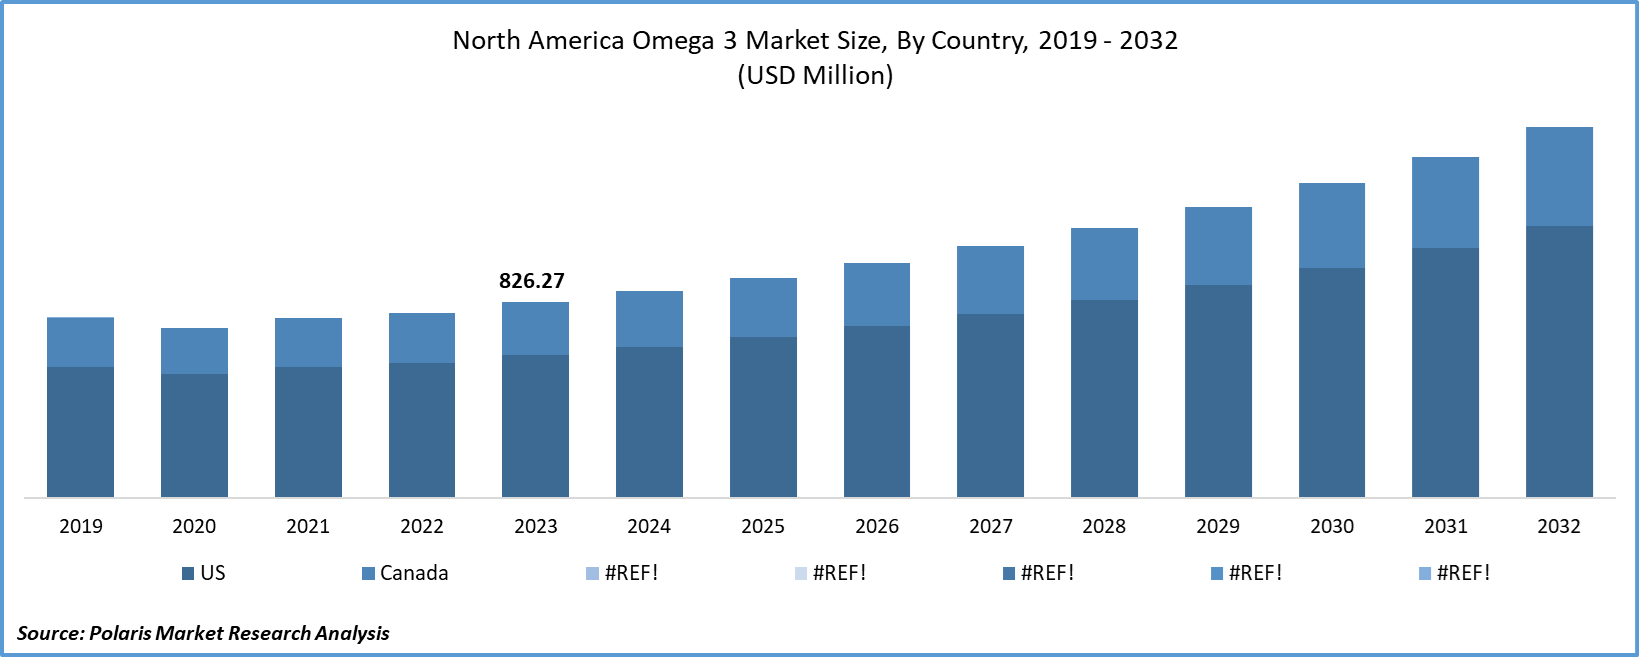 North America Omega 3 Market